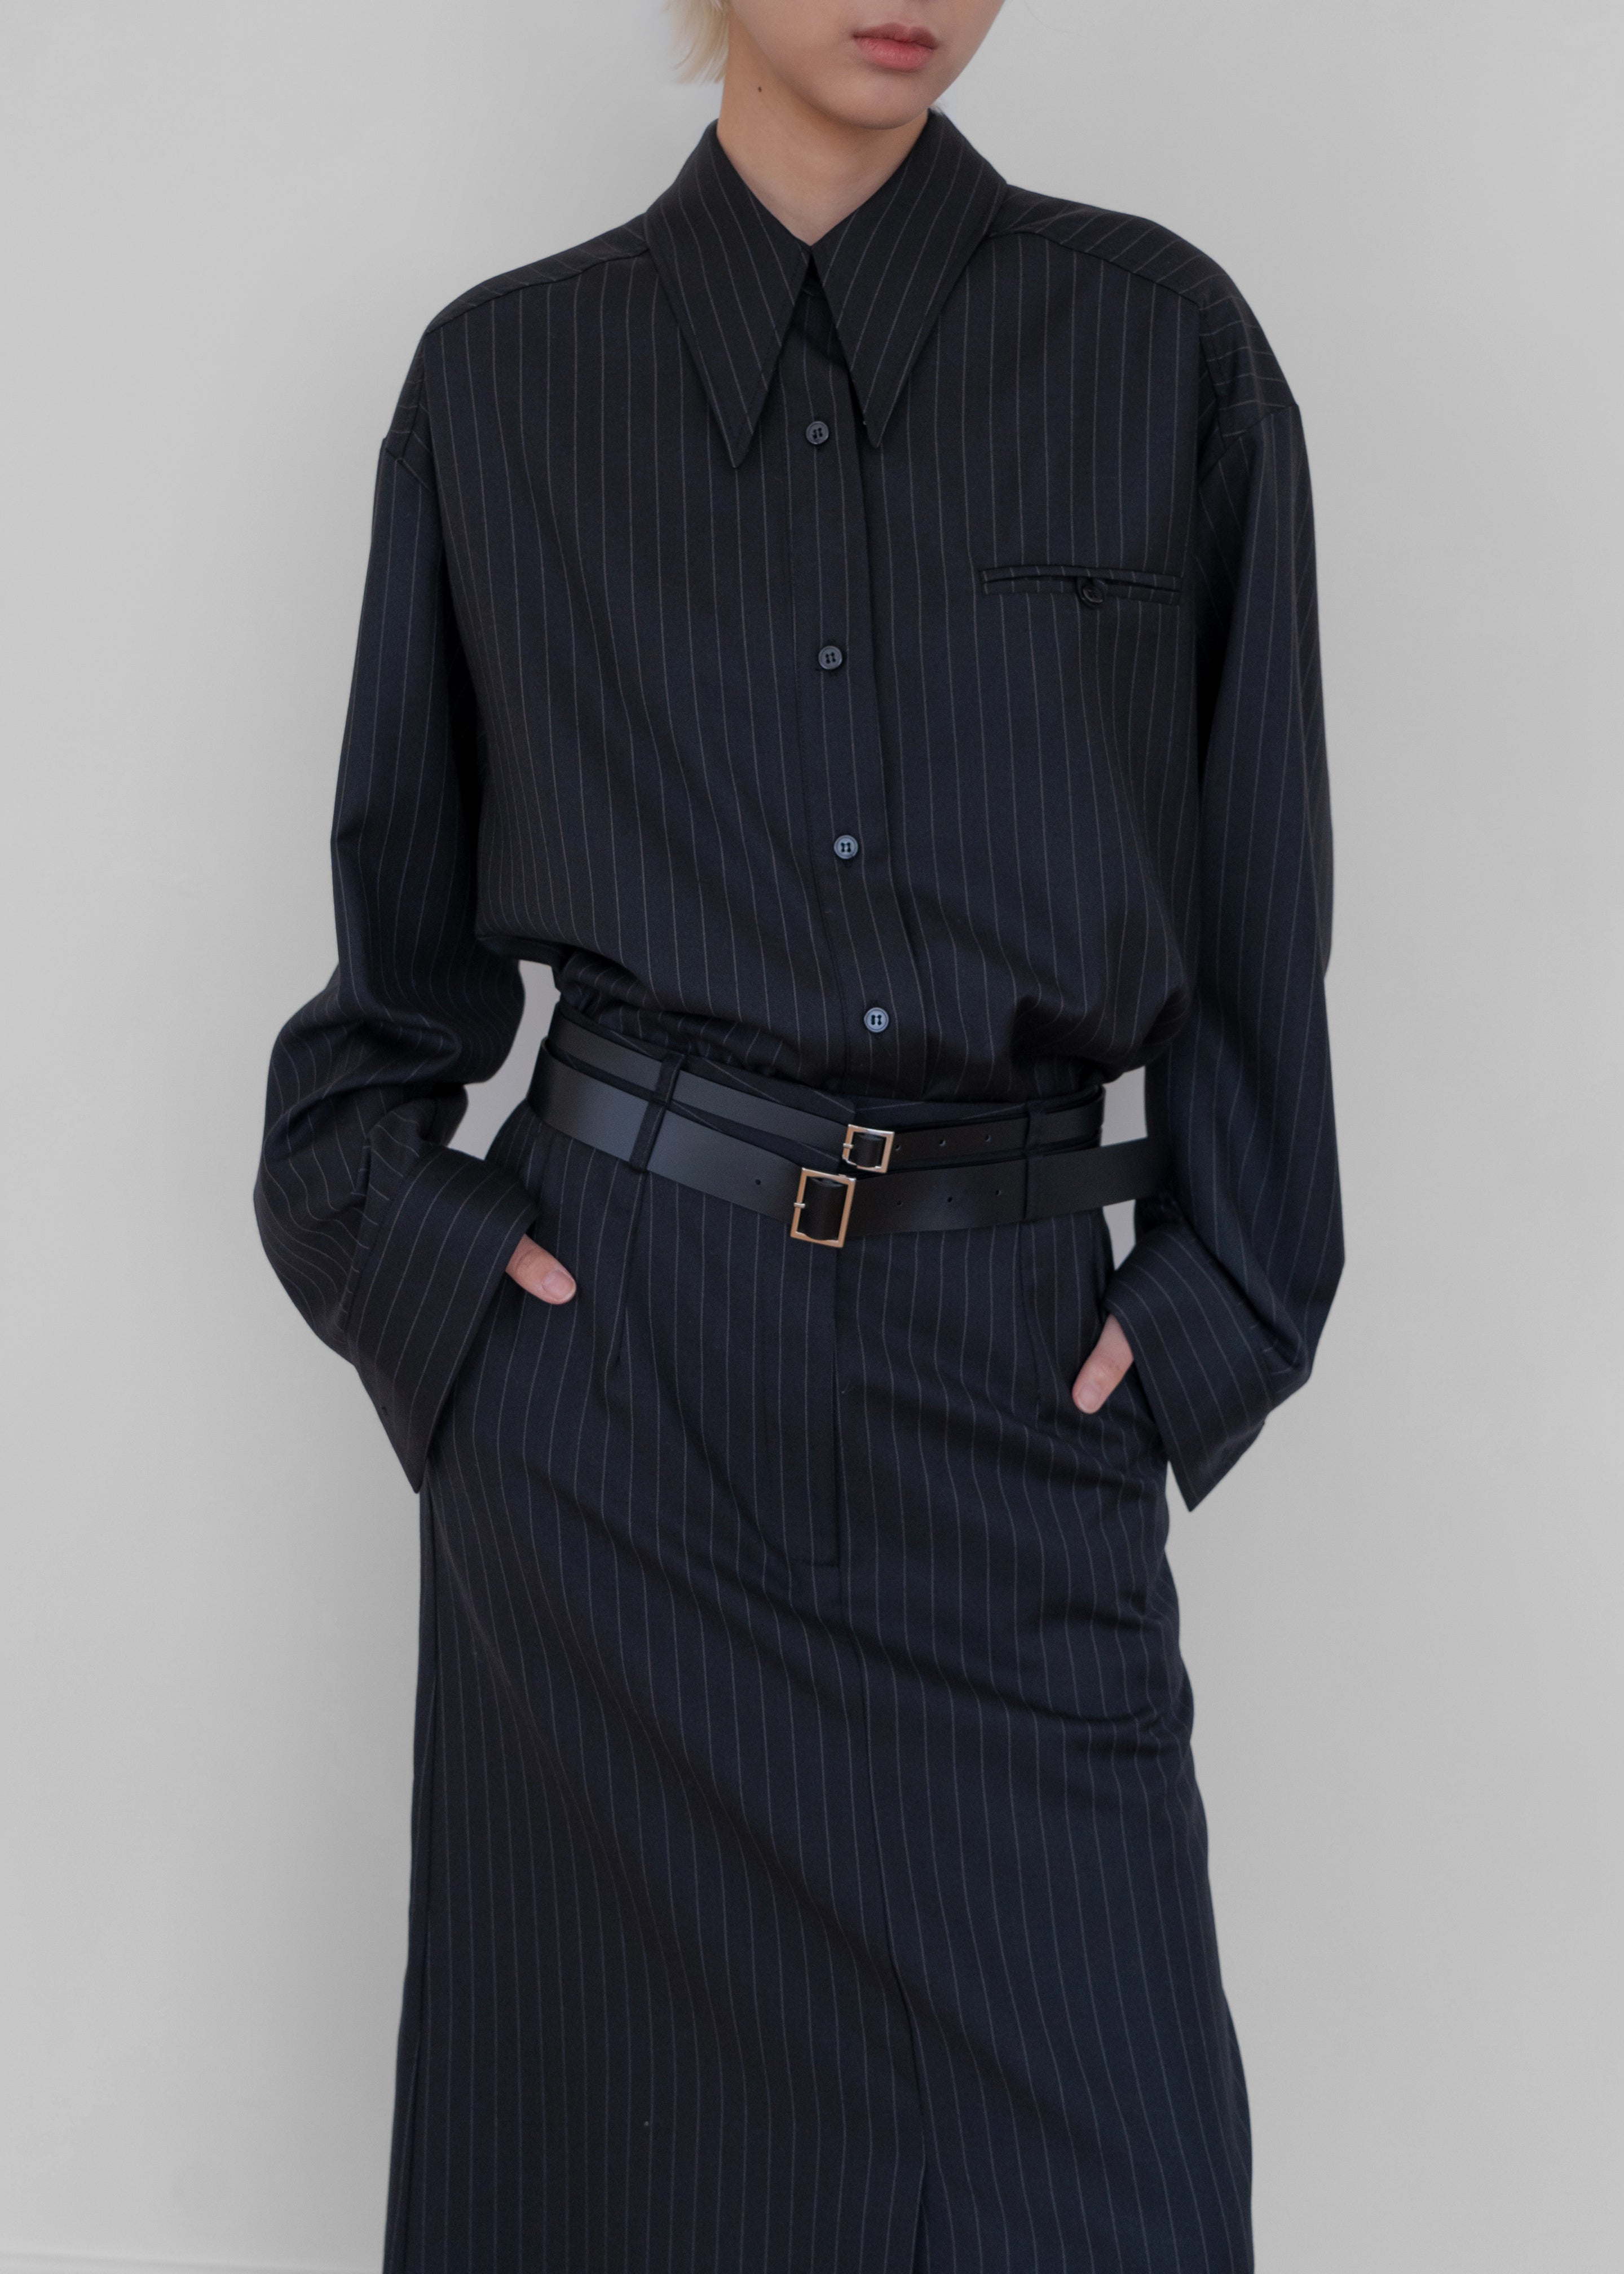 Kerry Button Up Shirt - Black Pinstripe - 3